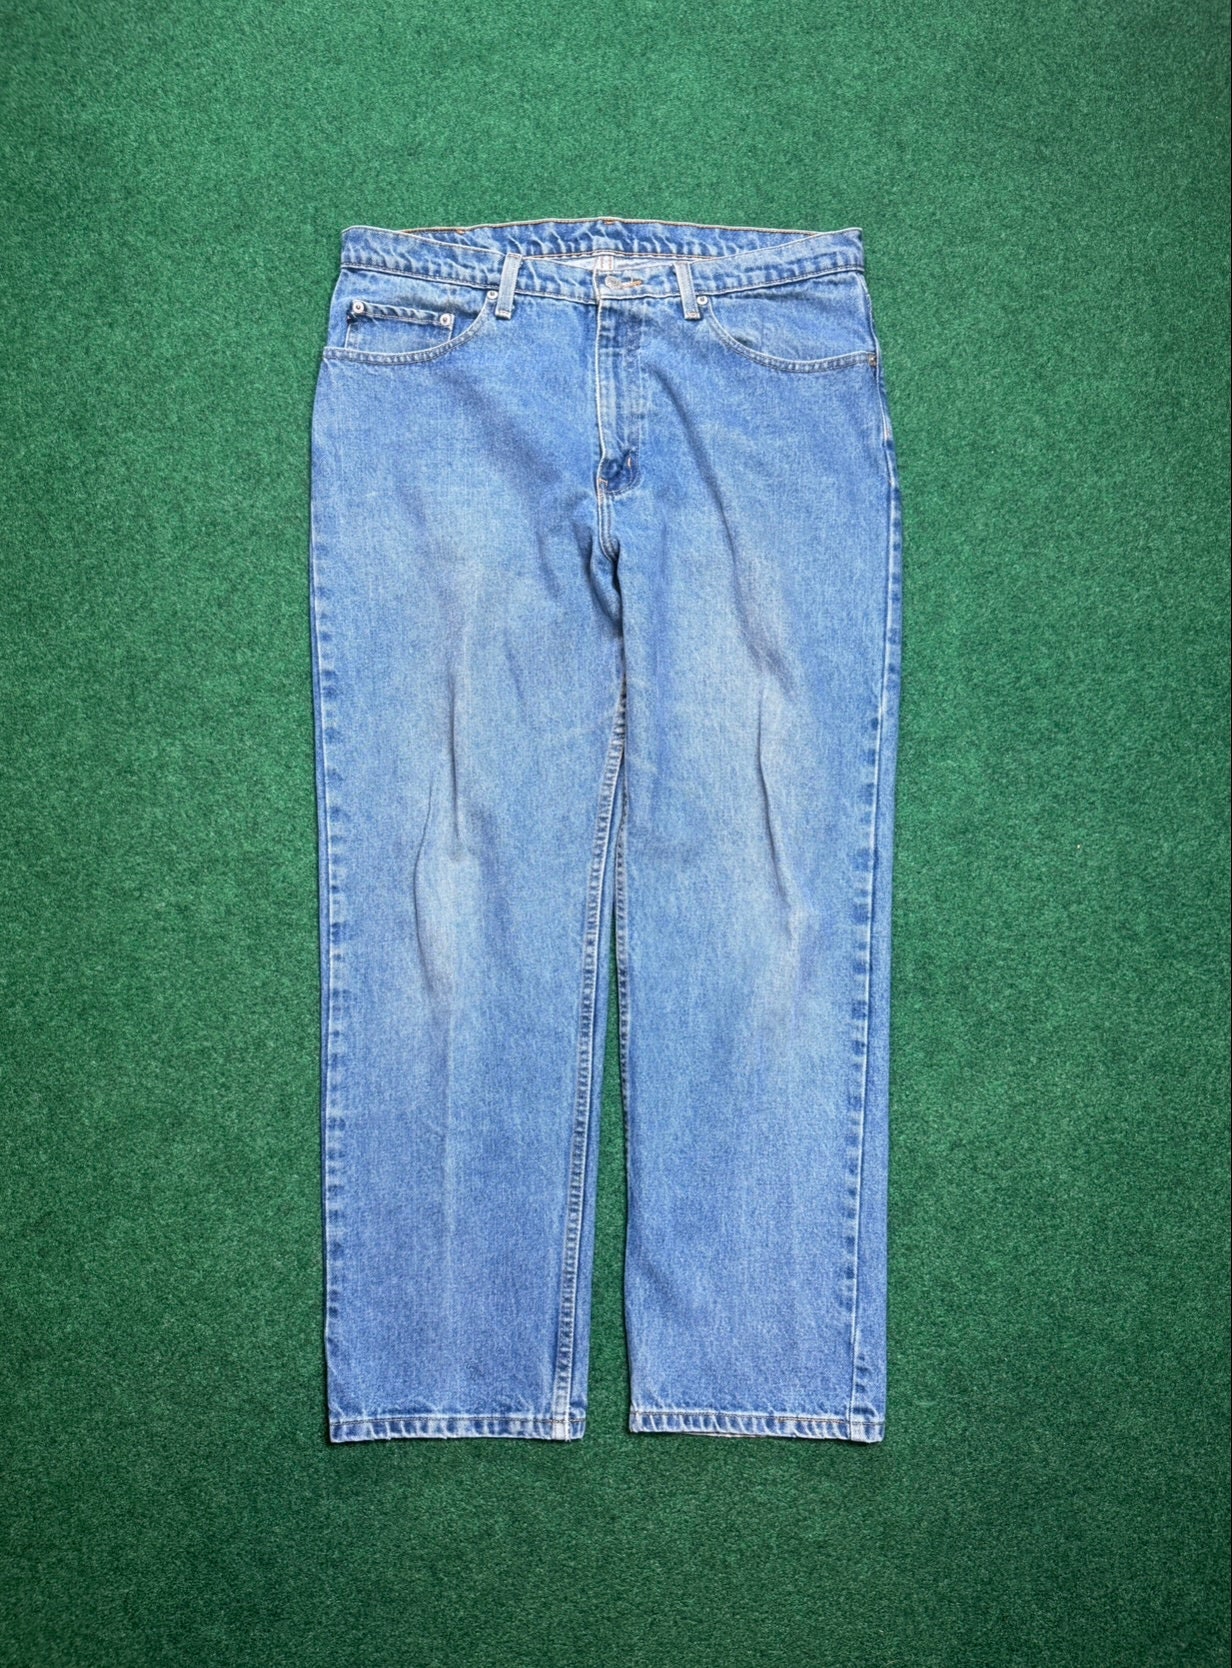 RL Polo Jeans Co Mens 36x30 Stone Wash C-5 Carpenter Straight Leg Denim  Jeans